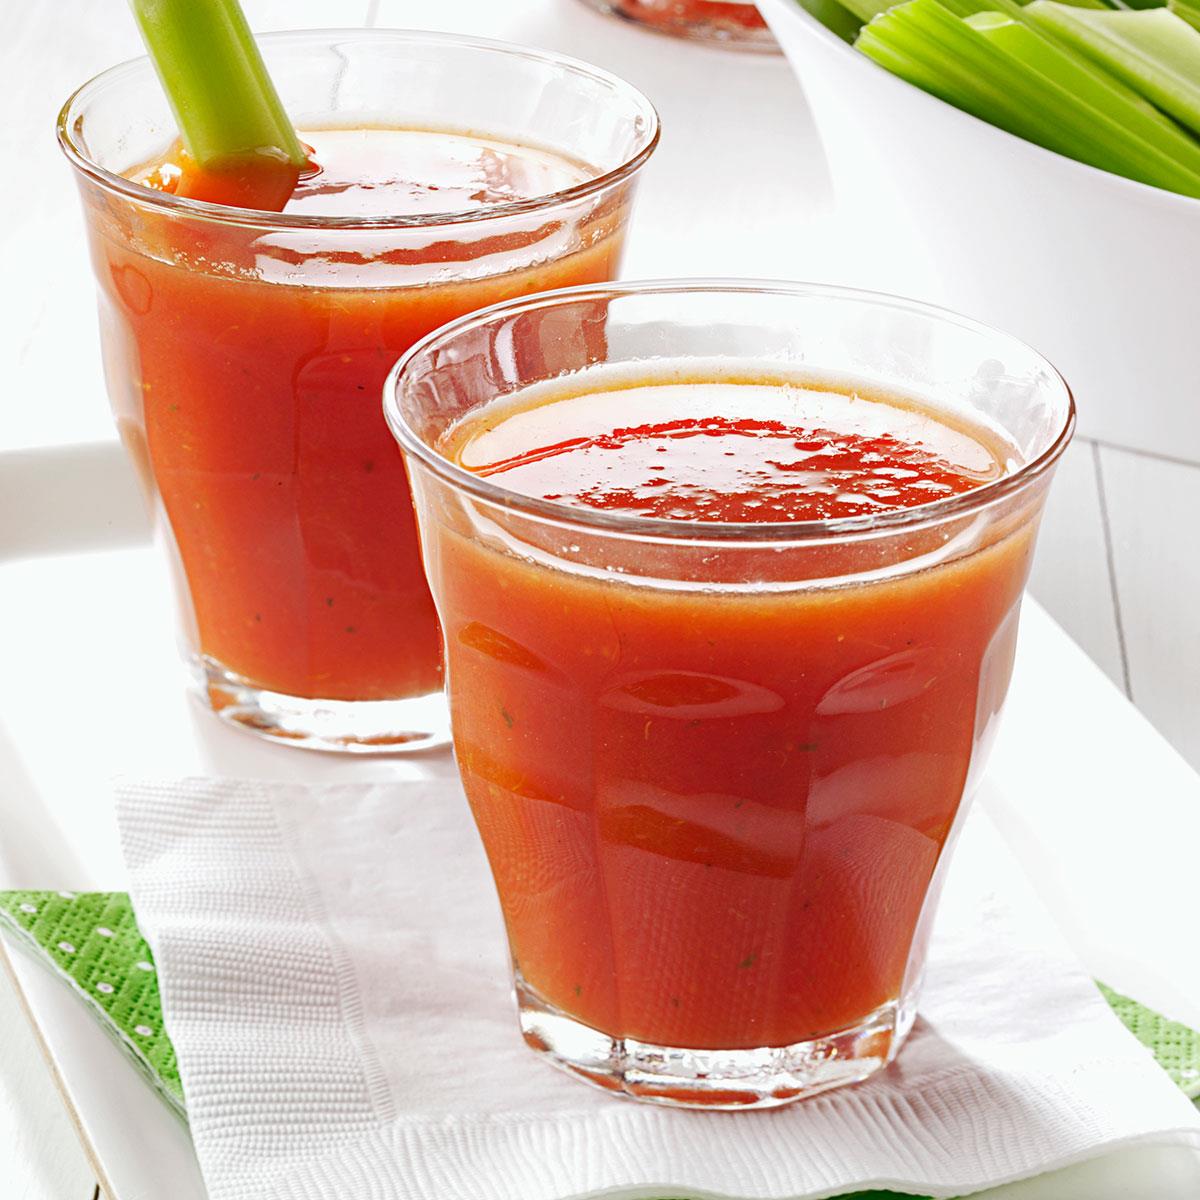 Spicy Tomato Juice Recipe: How to Make It image